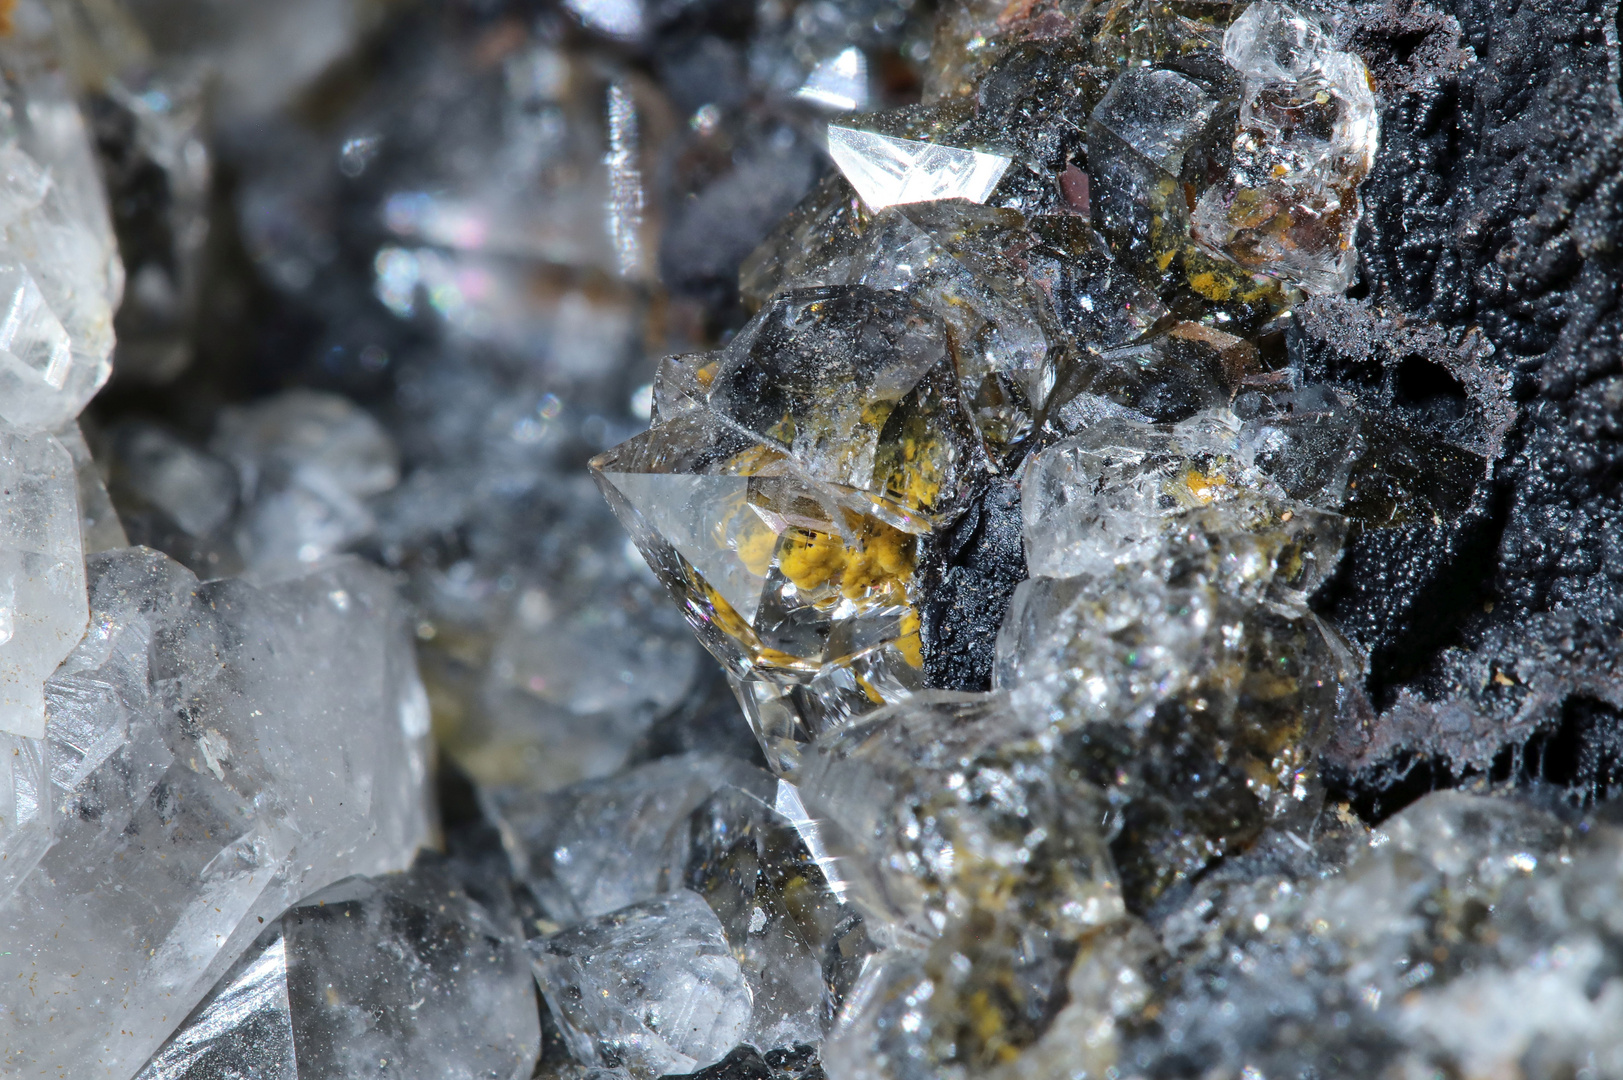 Bergkristall mit Innenleben - Fossile Bakterienstrukturen